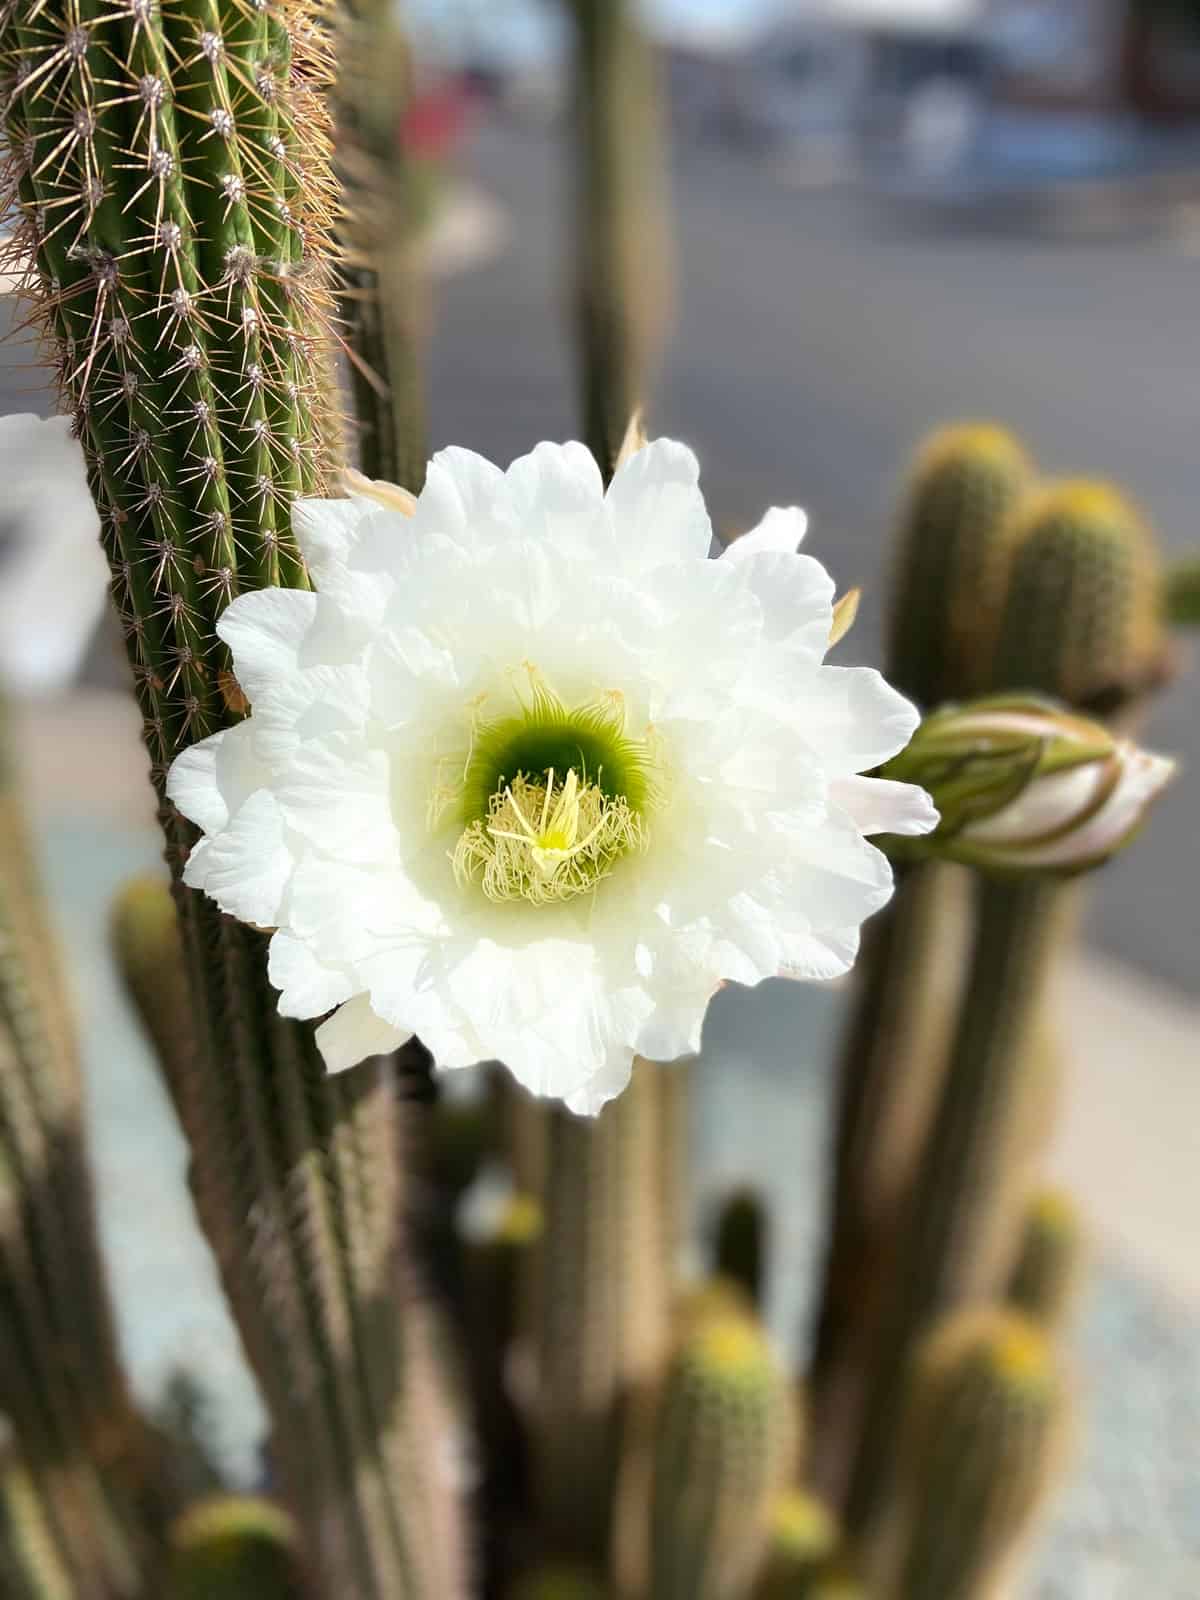 Blooming white petals of a Senita Cactus